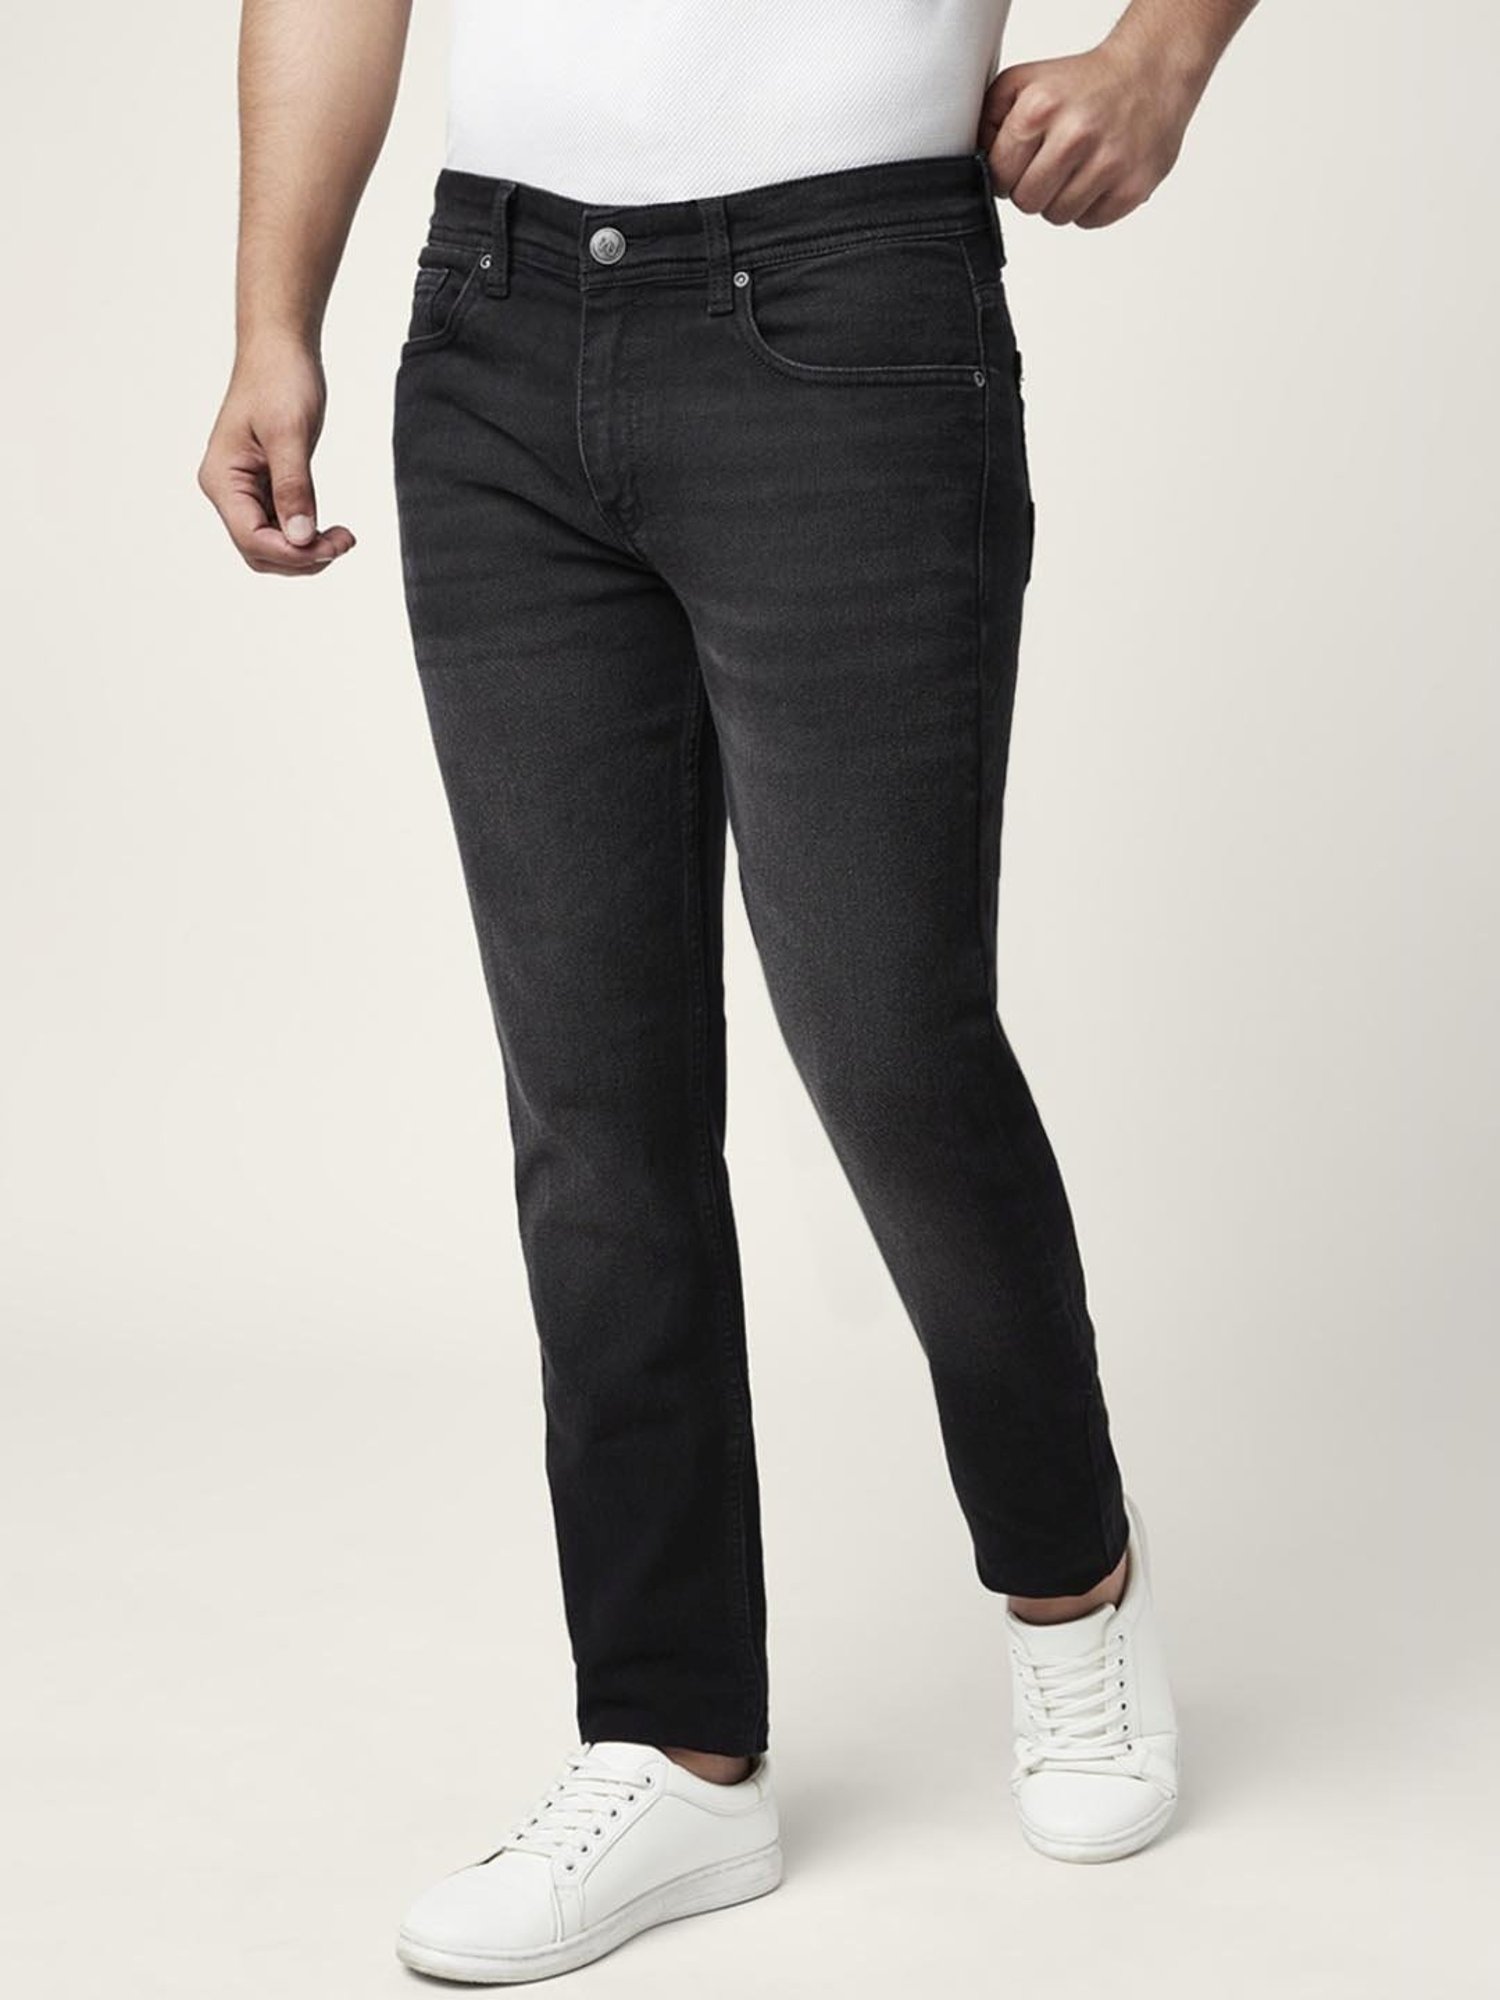 Aggregate more than 187 pantaloons black jeans latest